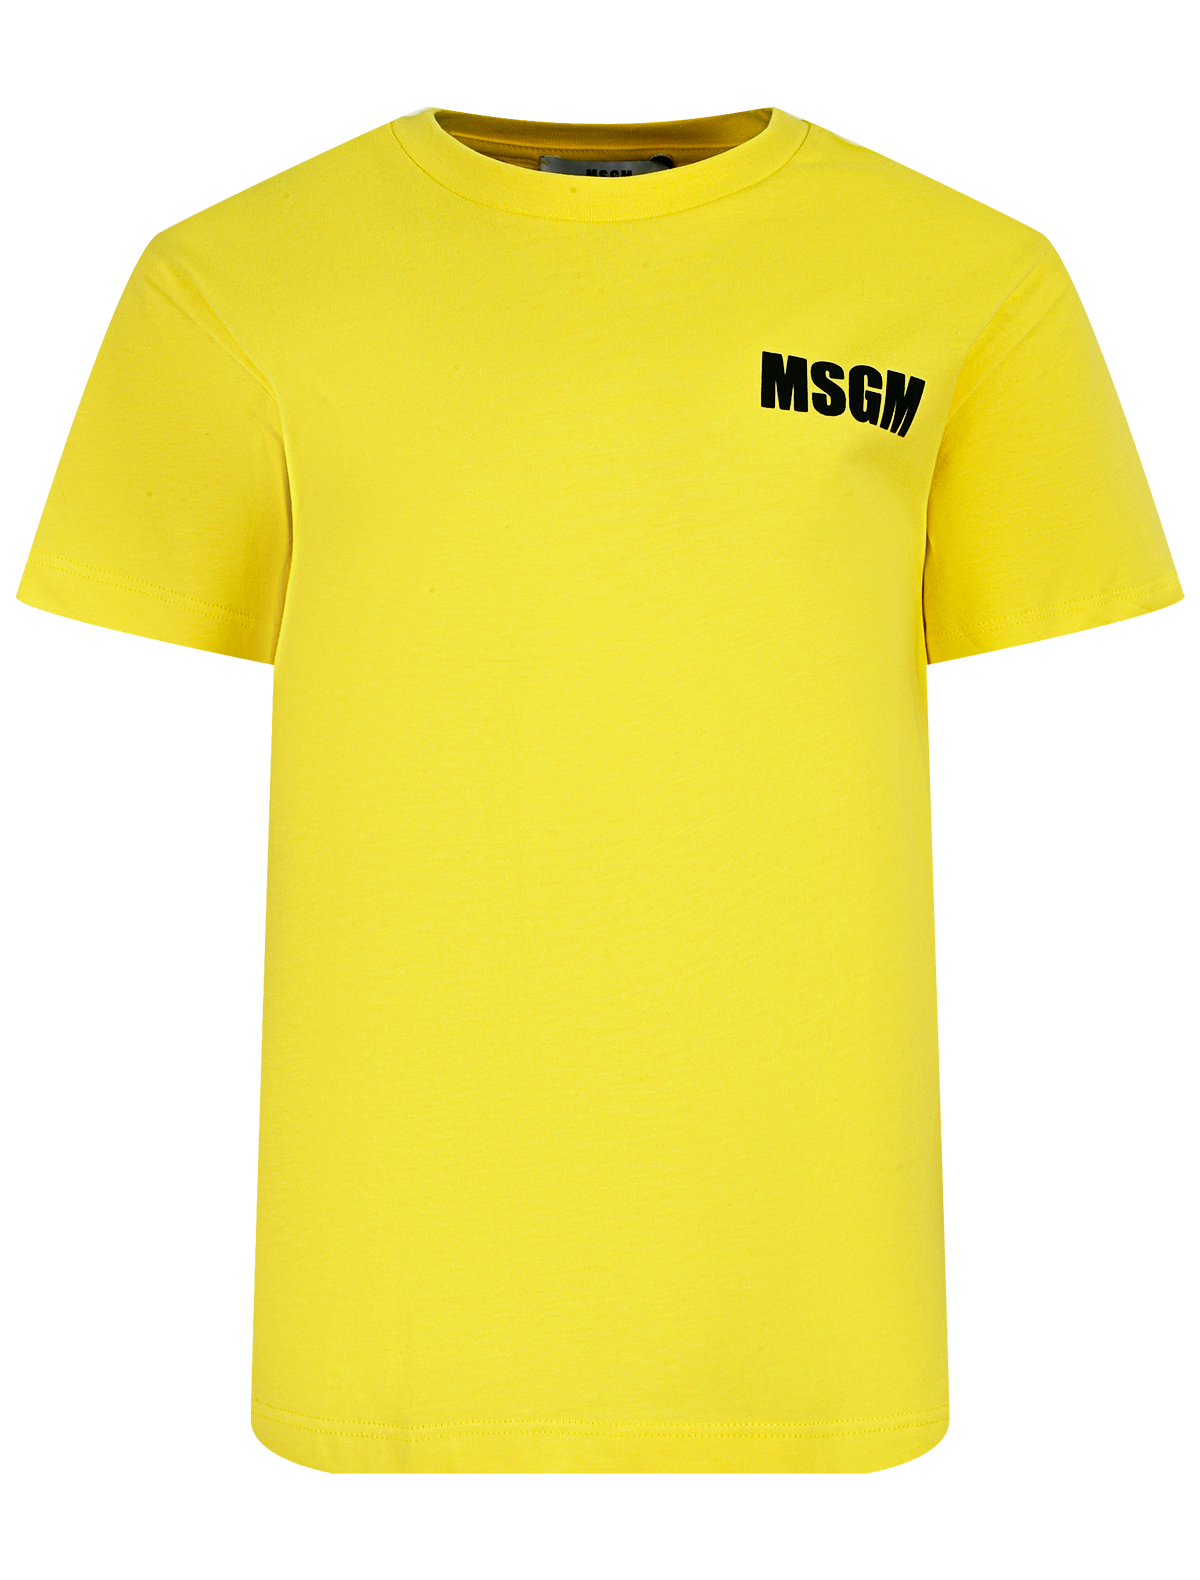 Футболка MSGM 2648593, цвет желтый, размер 9 1134529410992 - фото 1